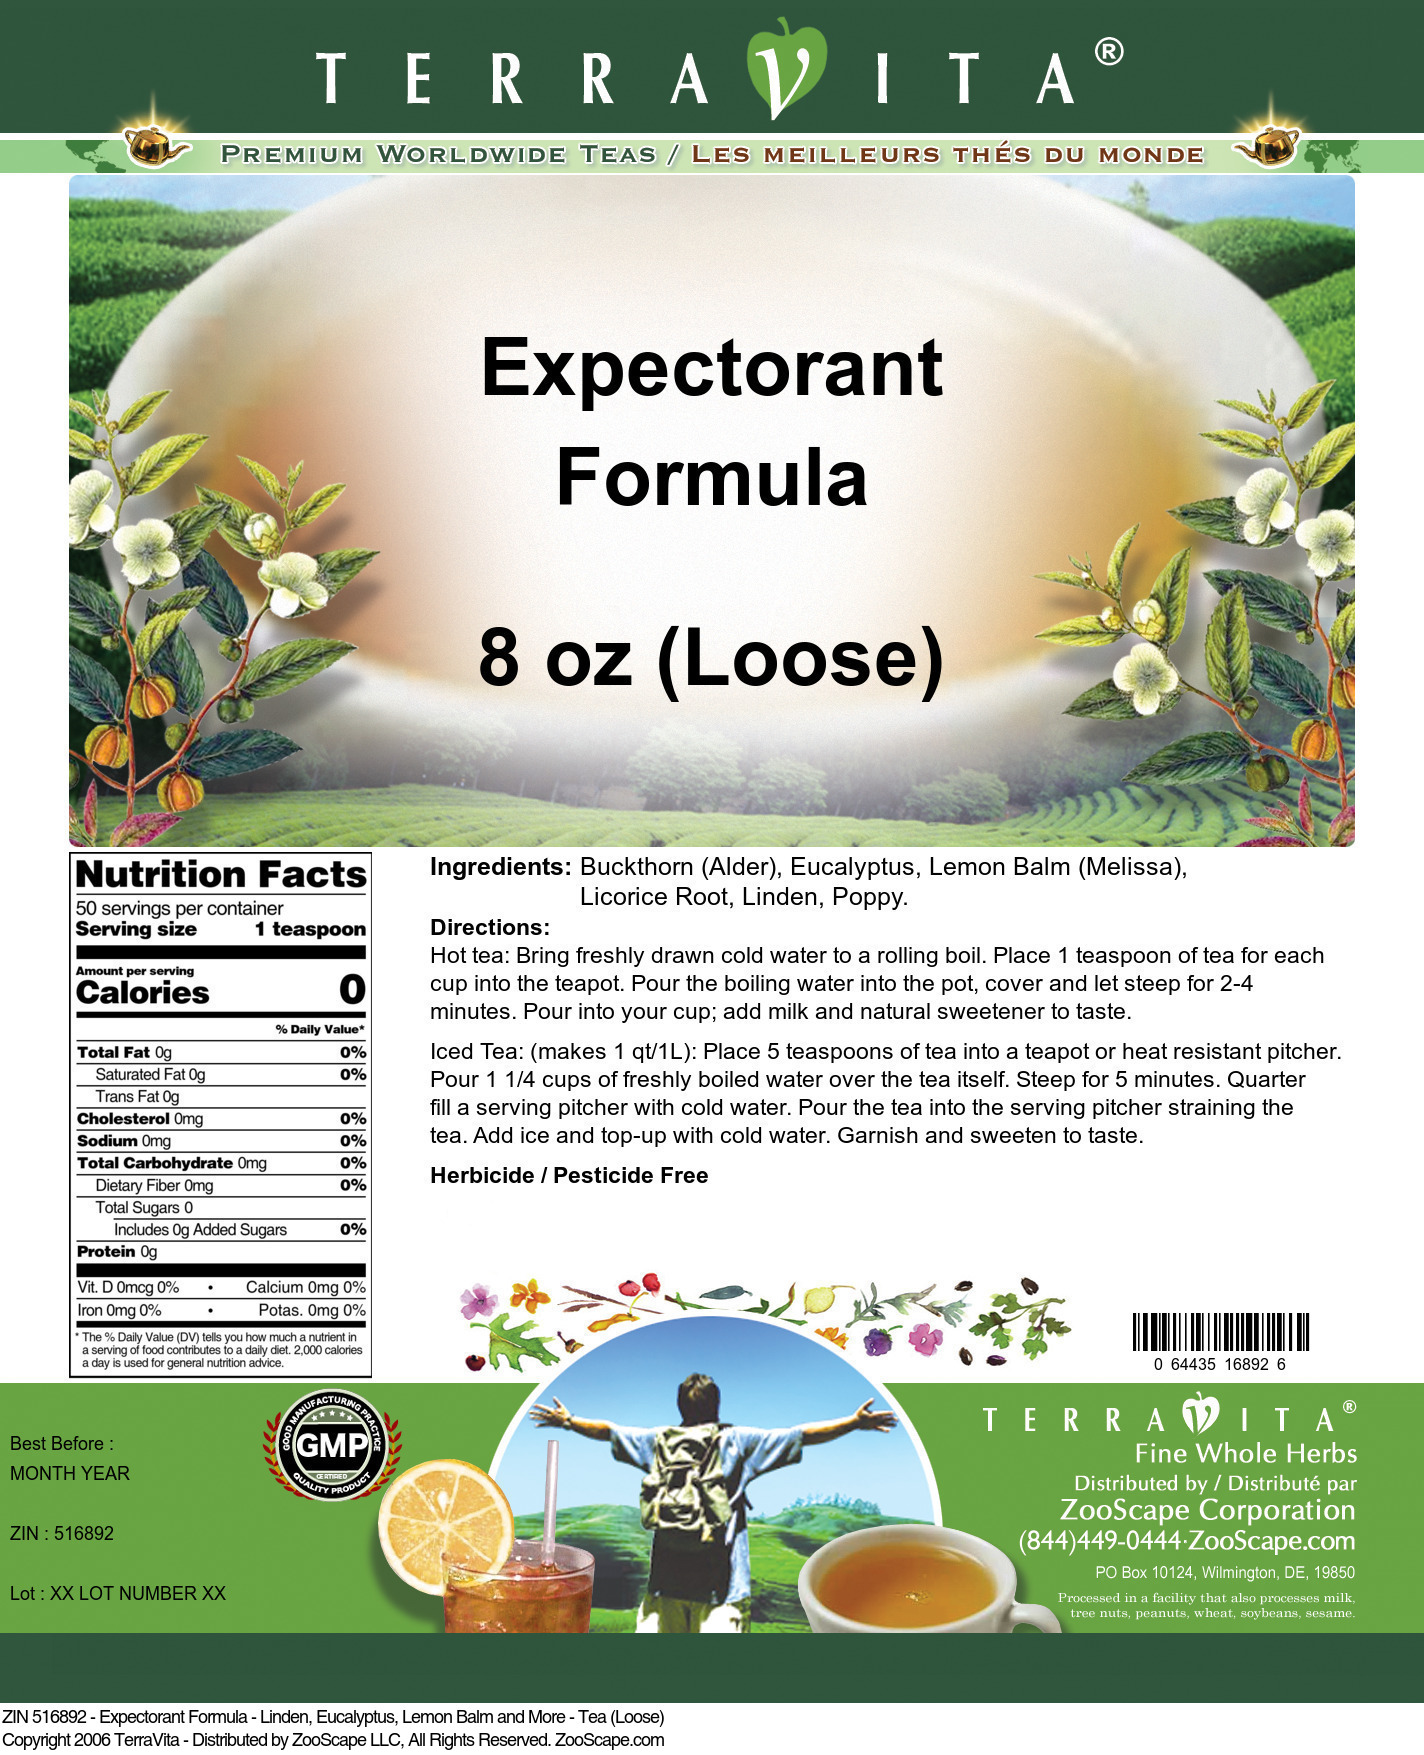 Expectorant Formula - Linden, Eucalyptus, Lemon Balm and More - Tea (Loose) - Label